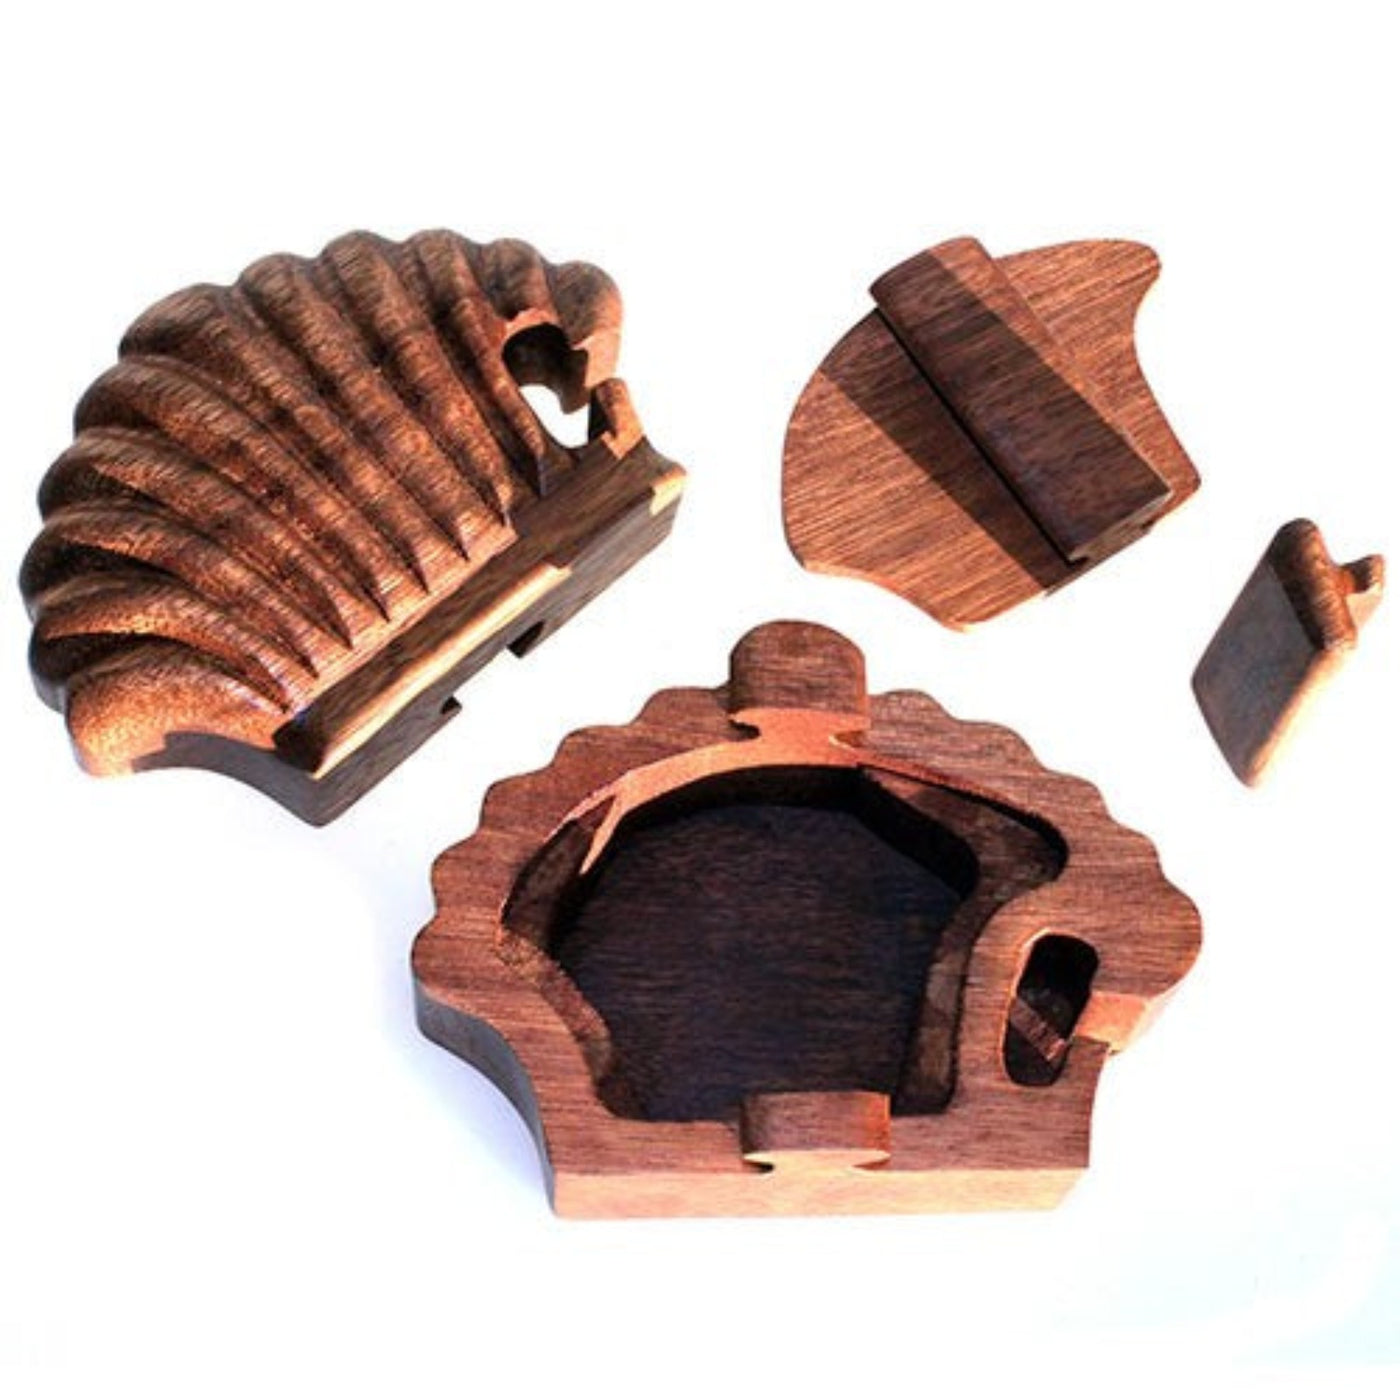 Handmade Seashell Shaped Wooden Magic Puzzle Storage Box.